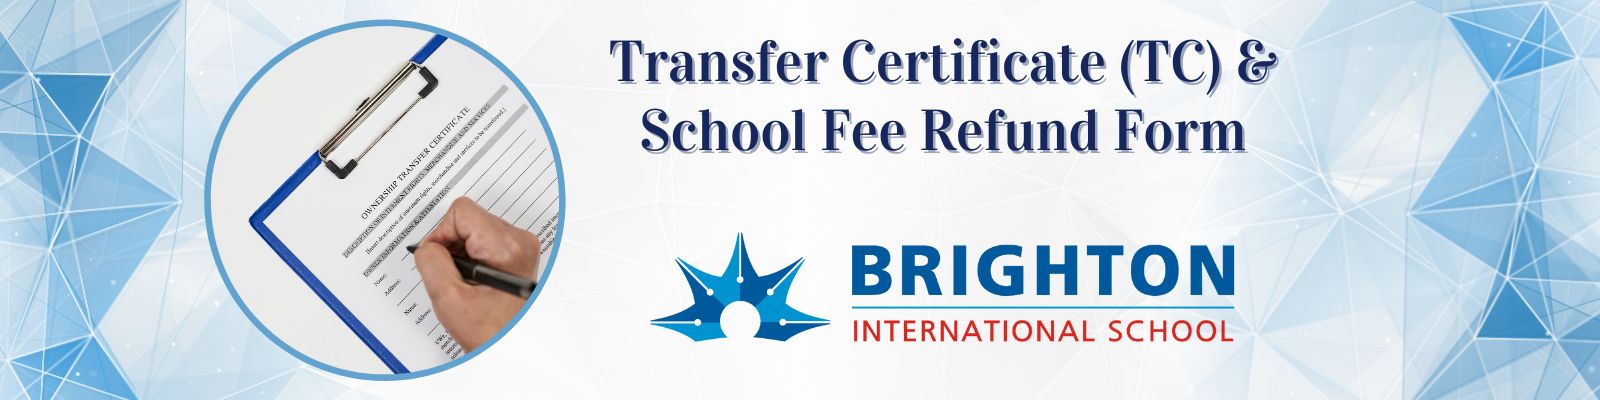 TC & Refund Request at Brighton International School